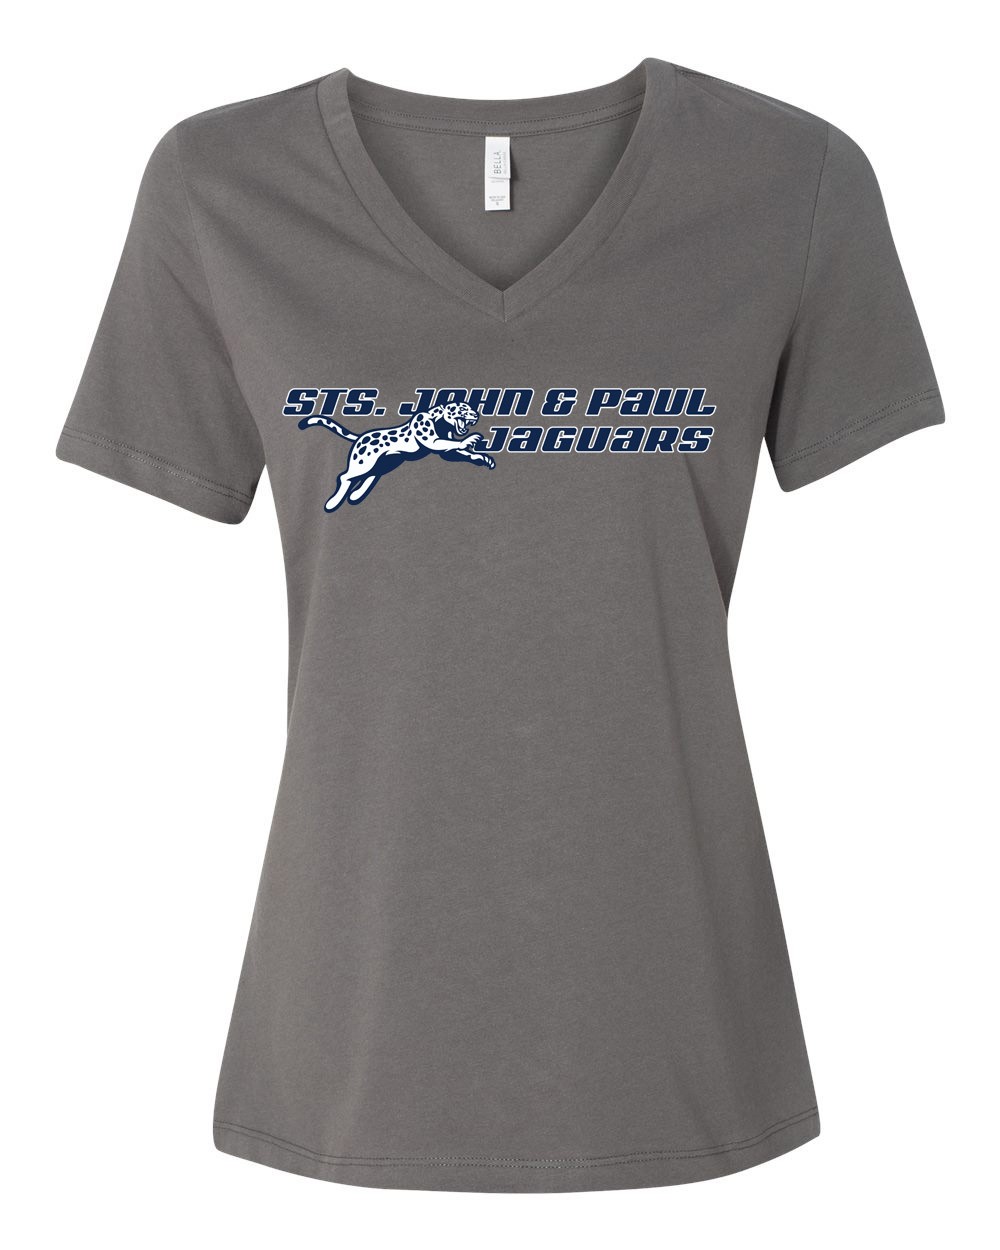 SJP Spirit Wear Women's V-Neck S/S T-shirt w/ Jaguar Logo - Please Allow 2-3 Weeks for Delivery